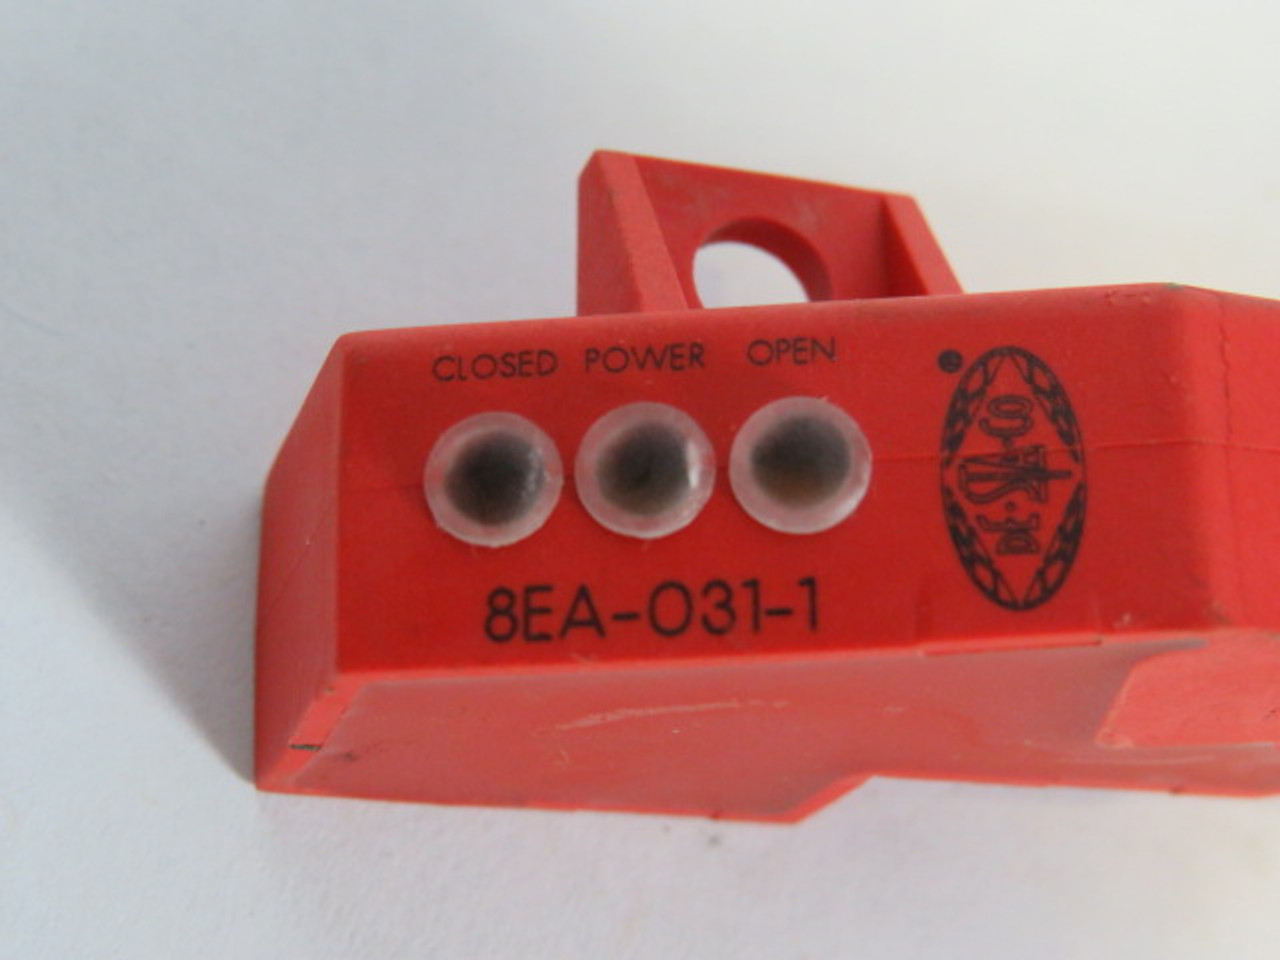 Destaco 8EA-031-1 Pneumatic Sensor w/ Leads USED